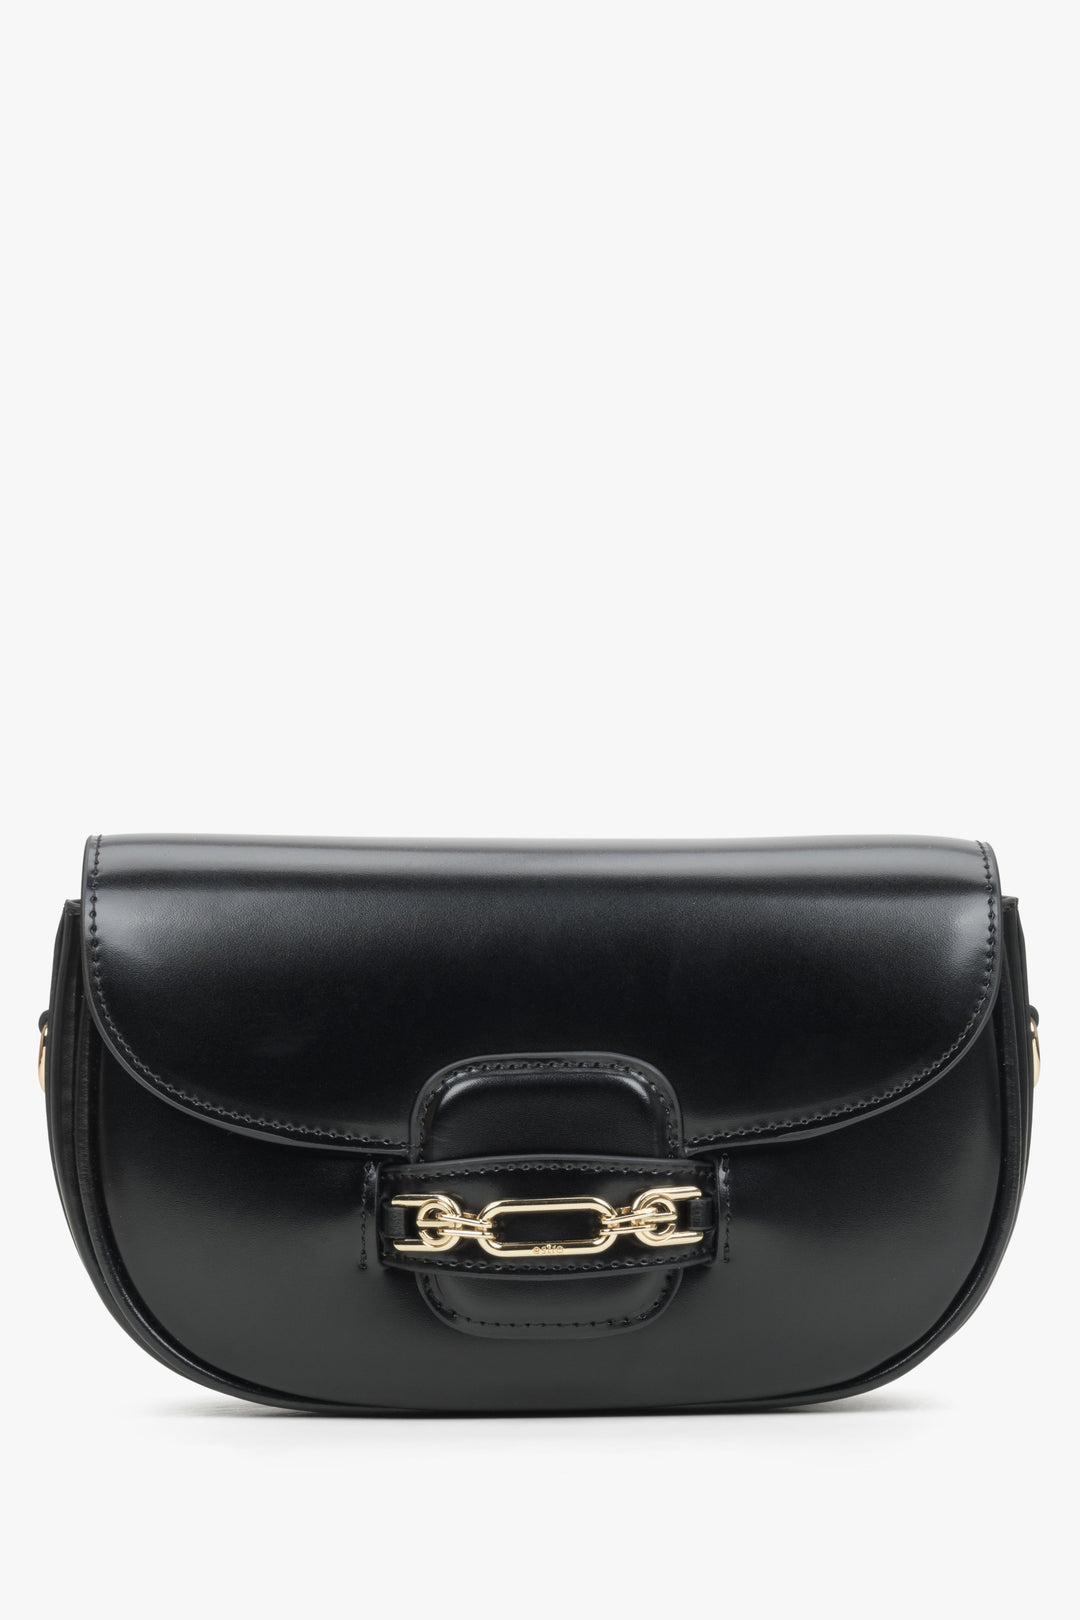 Estro women's leather bag with adjustable strap, black colour.